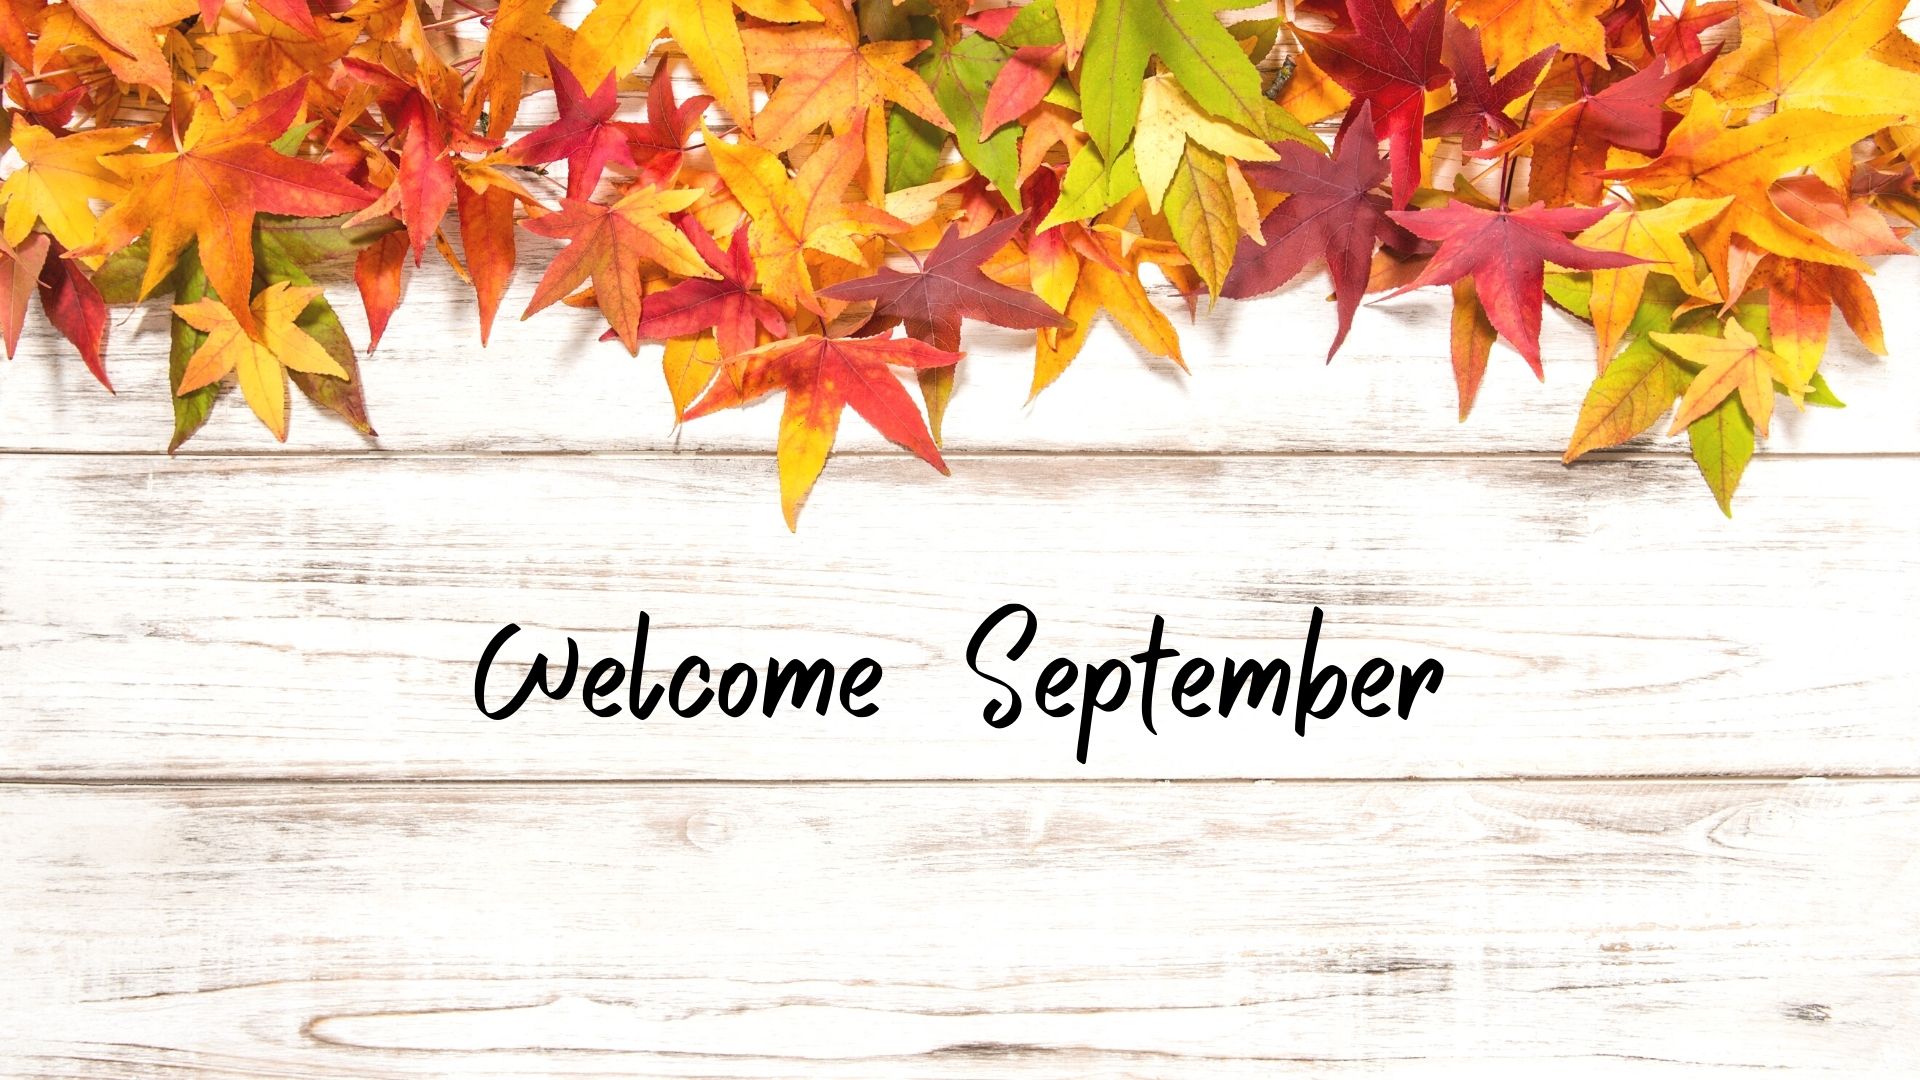 Welcome September desktop wallpaper
